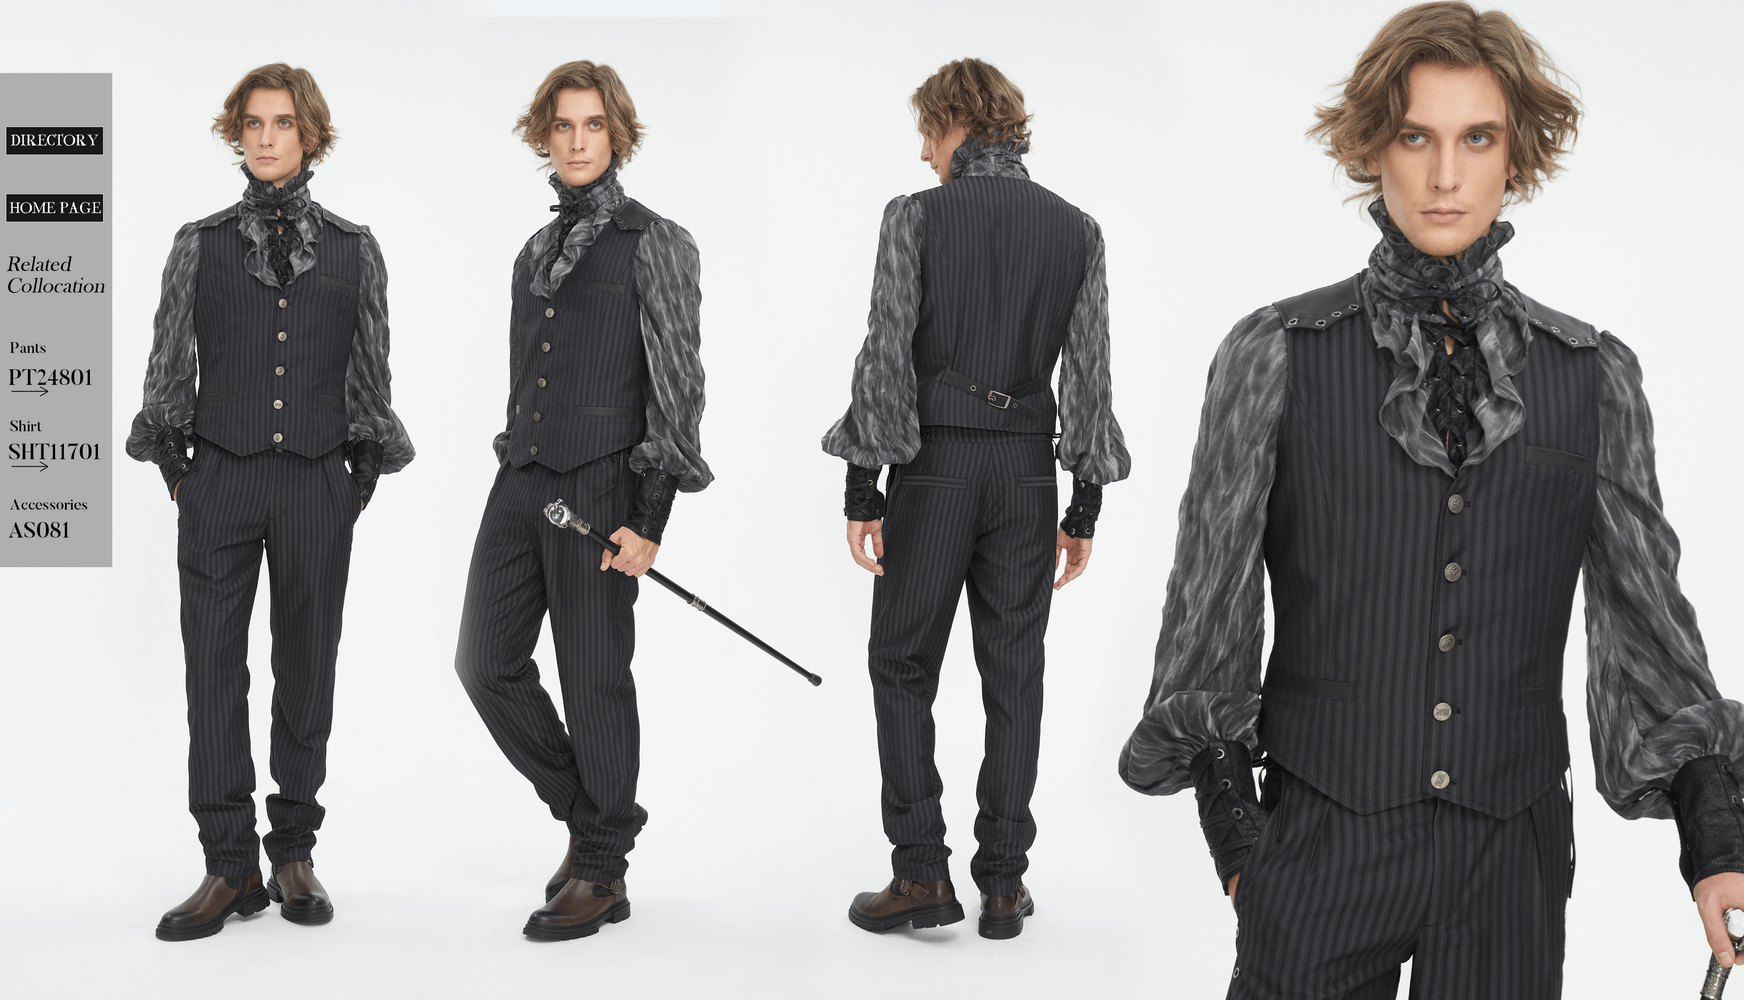 Vintage Gothic Striped V-Neck Waistcoat for Men